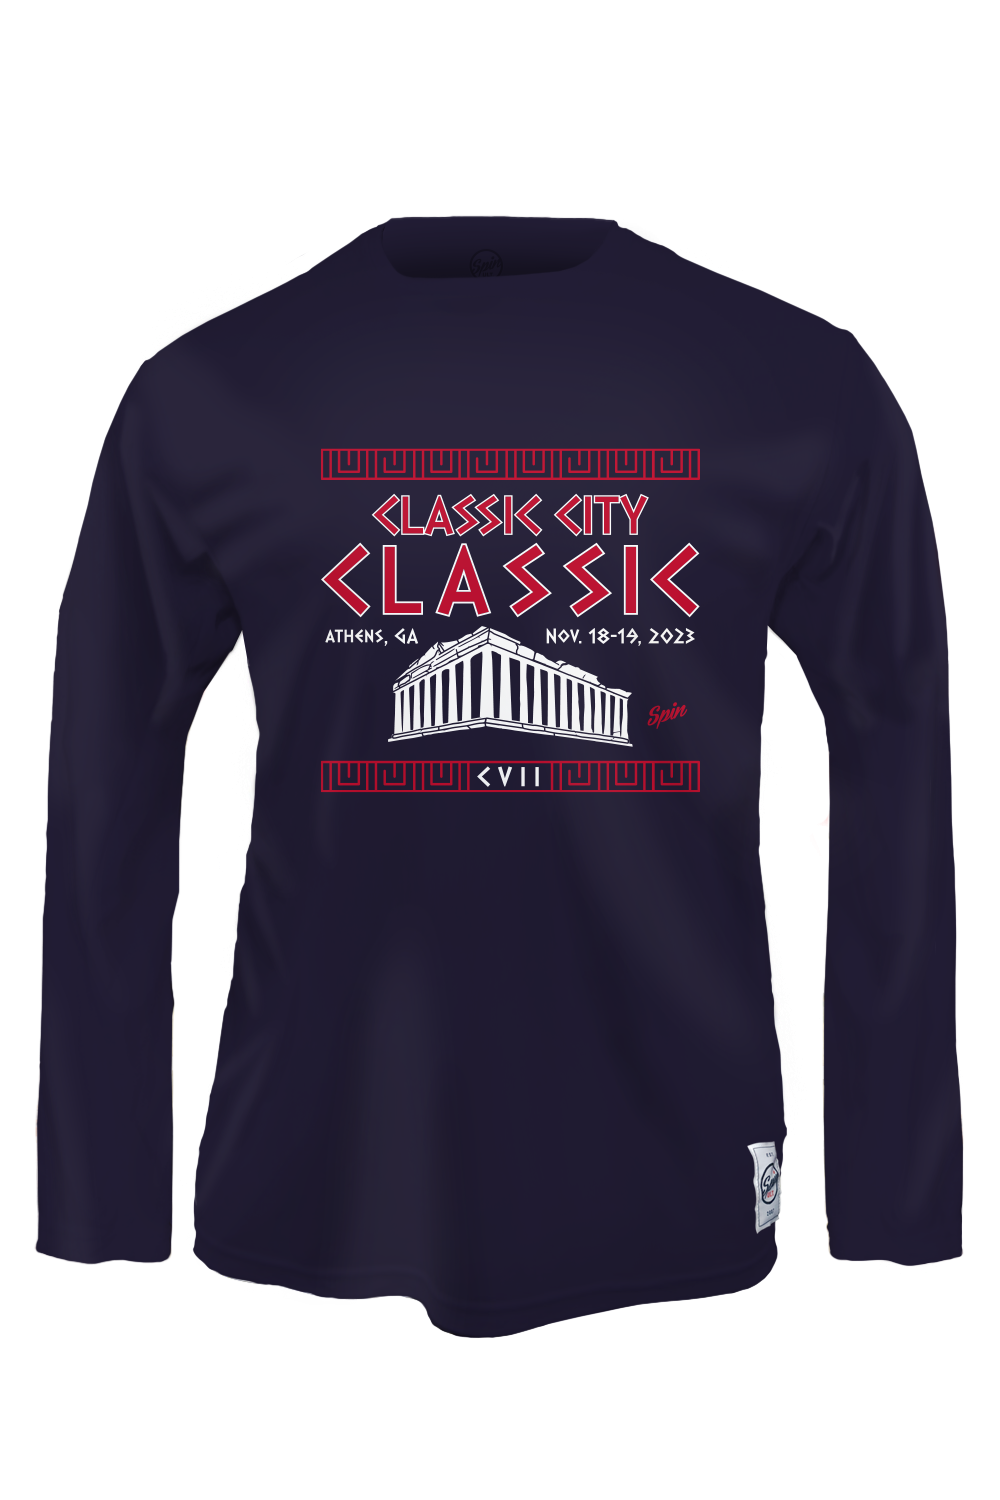 Classic City Classic 2023 Long Sleeve